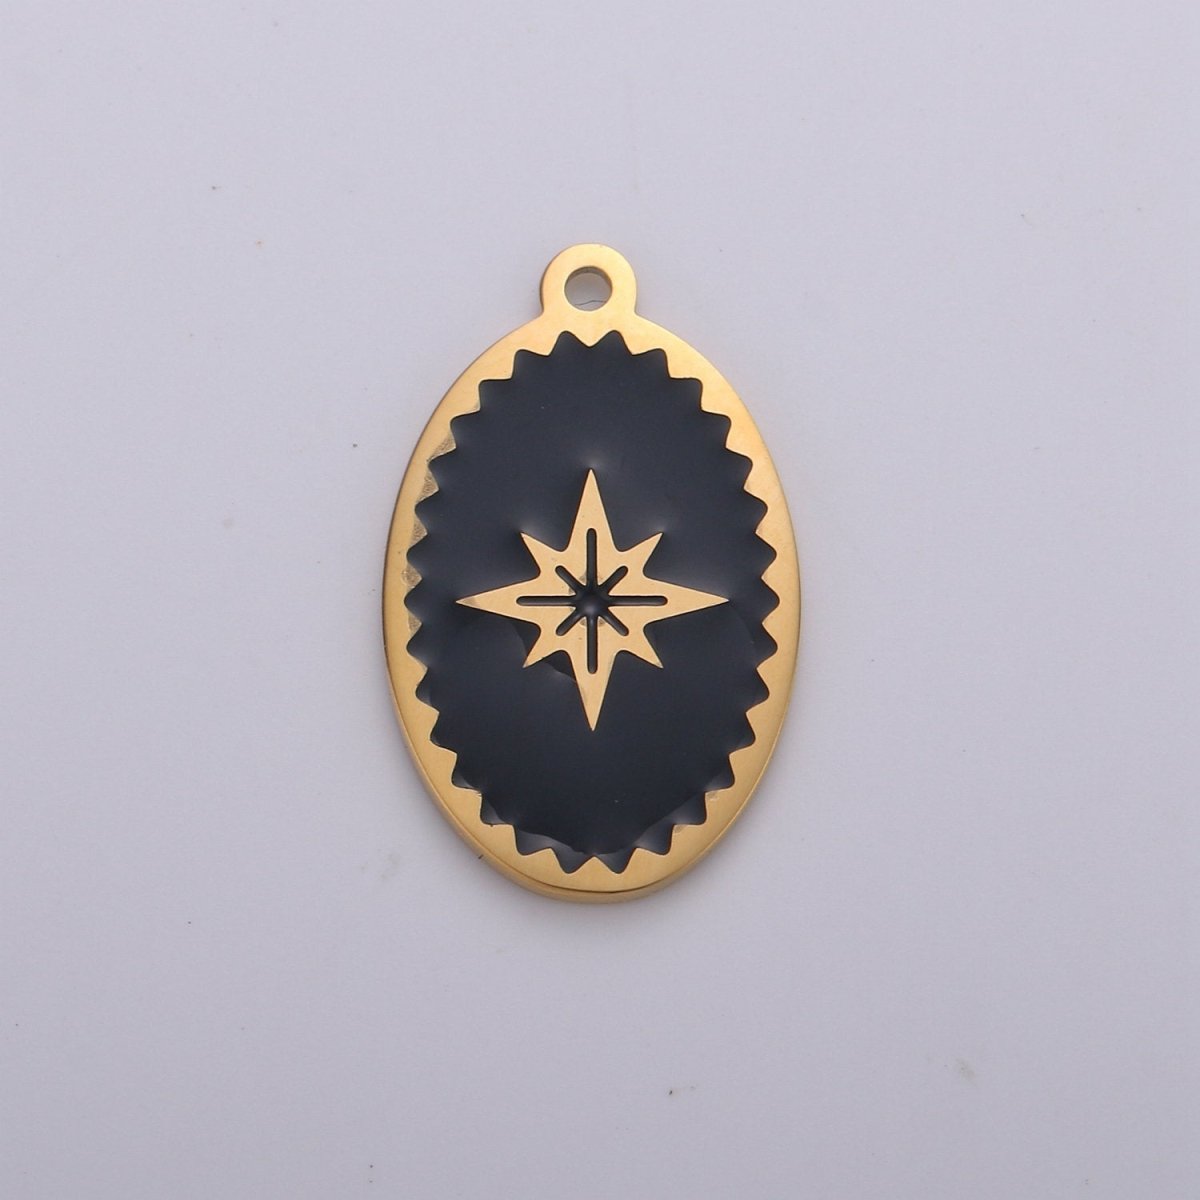 Dainty Gold North Star Pendant 24k Gold Filled Starburst Charm Pink Teal black White Enamel Celestial Jewelry Minimalist Jewelry E-684-E-687 - DLUXCA